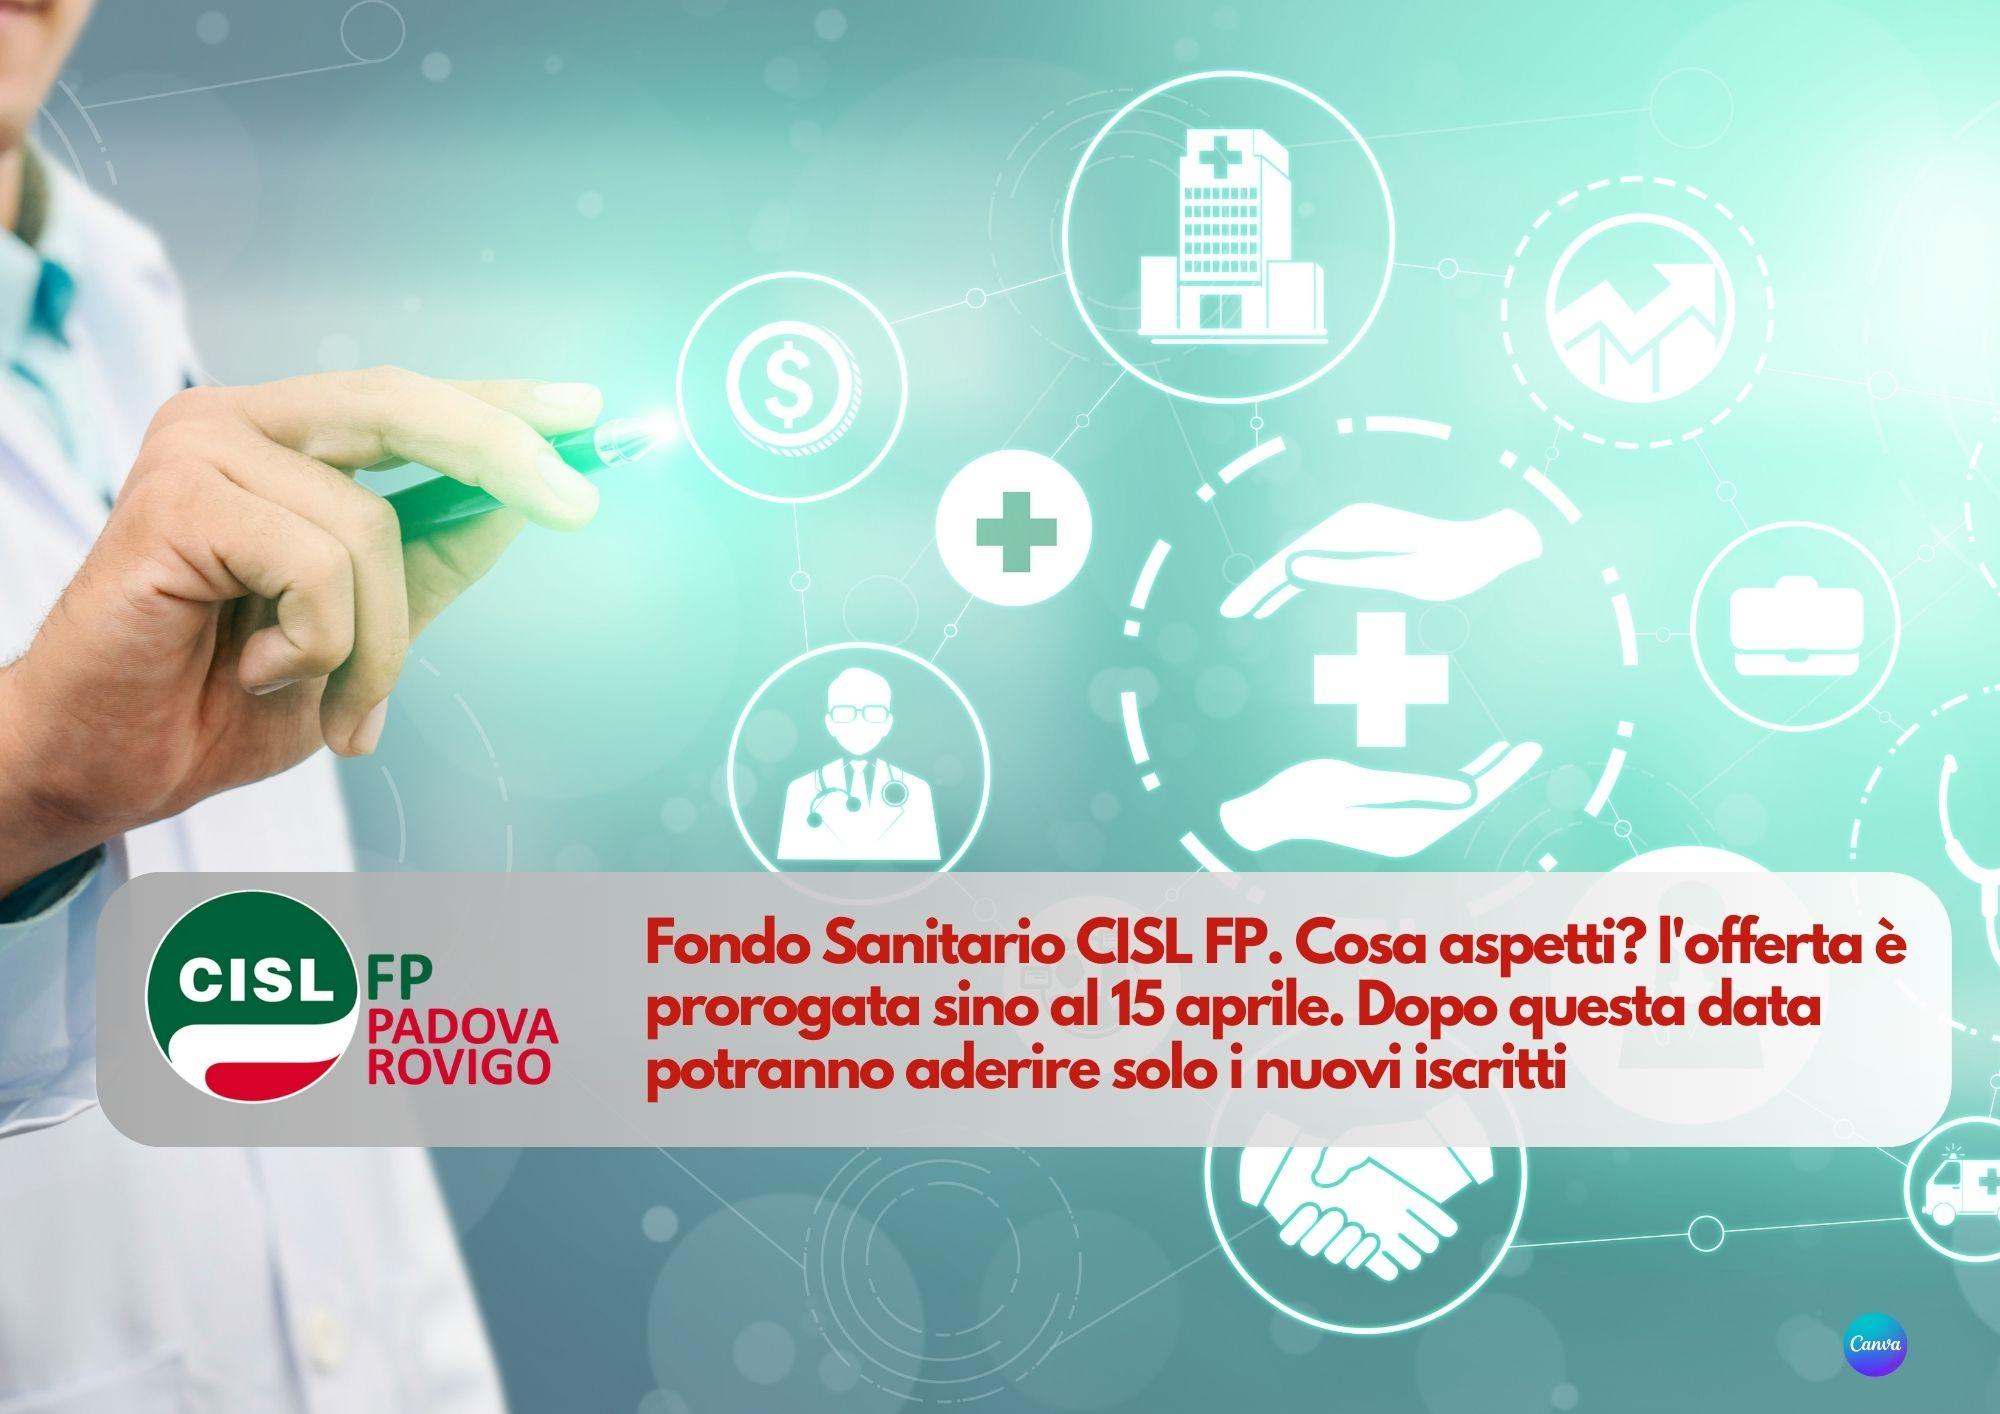 CISL FP Padova Rovigo.  Fondo Sanitario CISL FP. Cosa aspetti? l'offerta è prorogata sino al 15 aprile